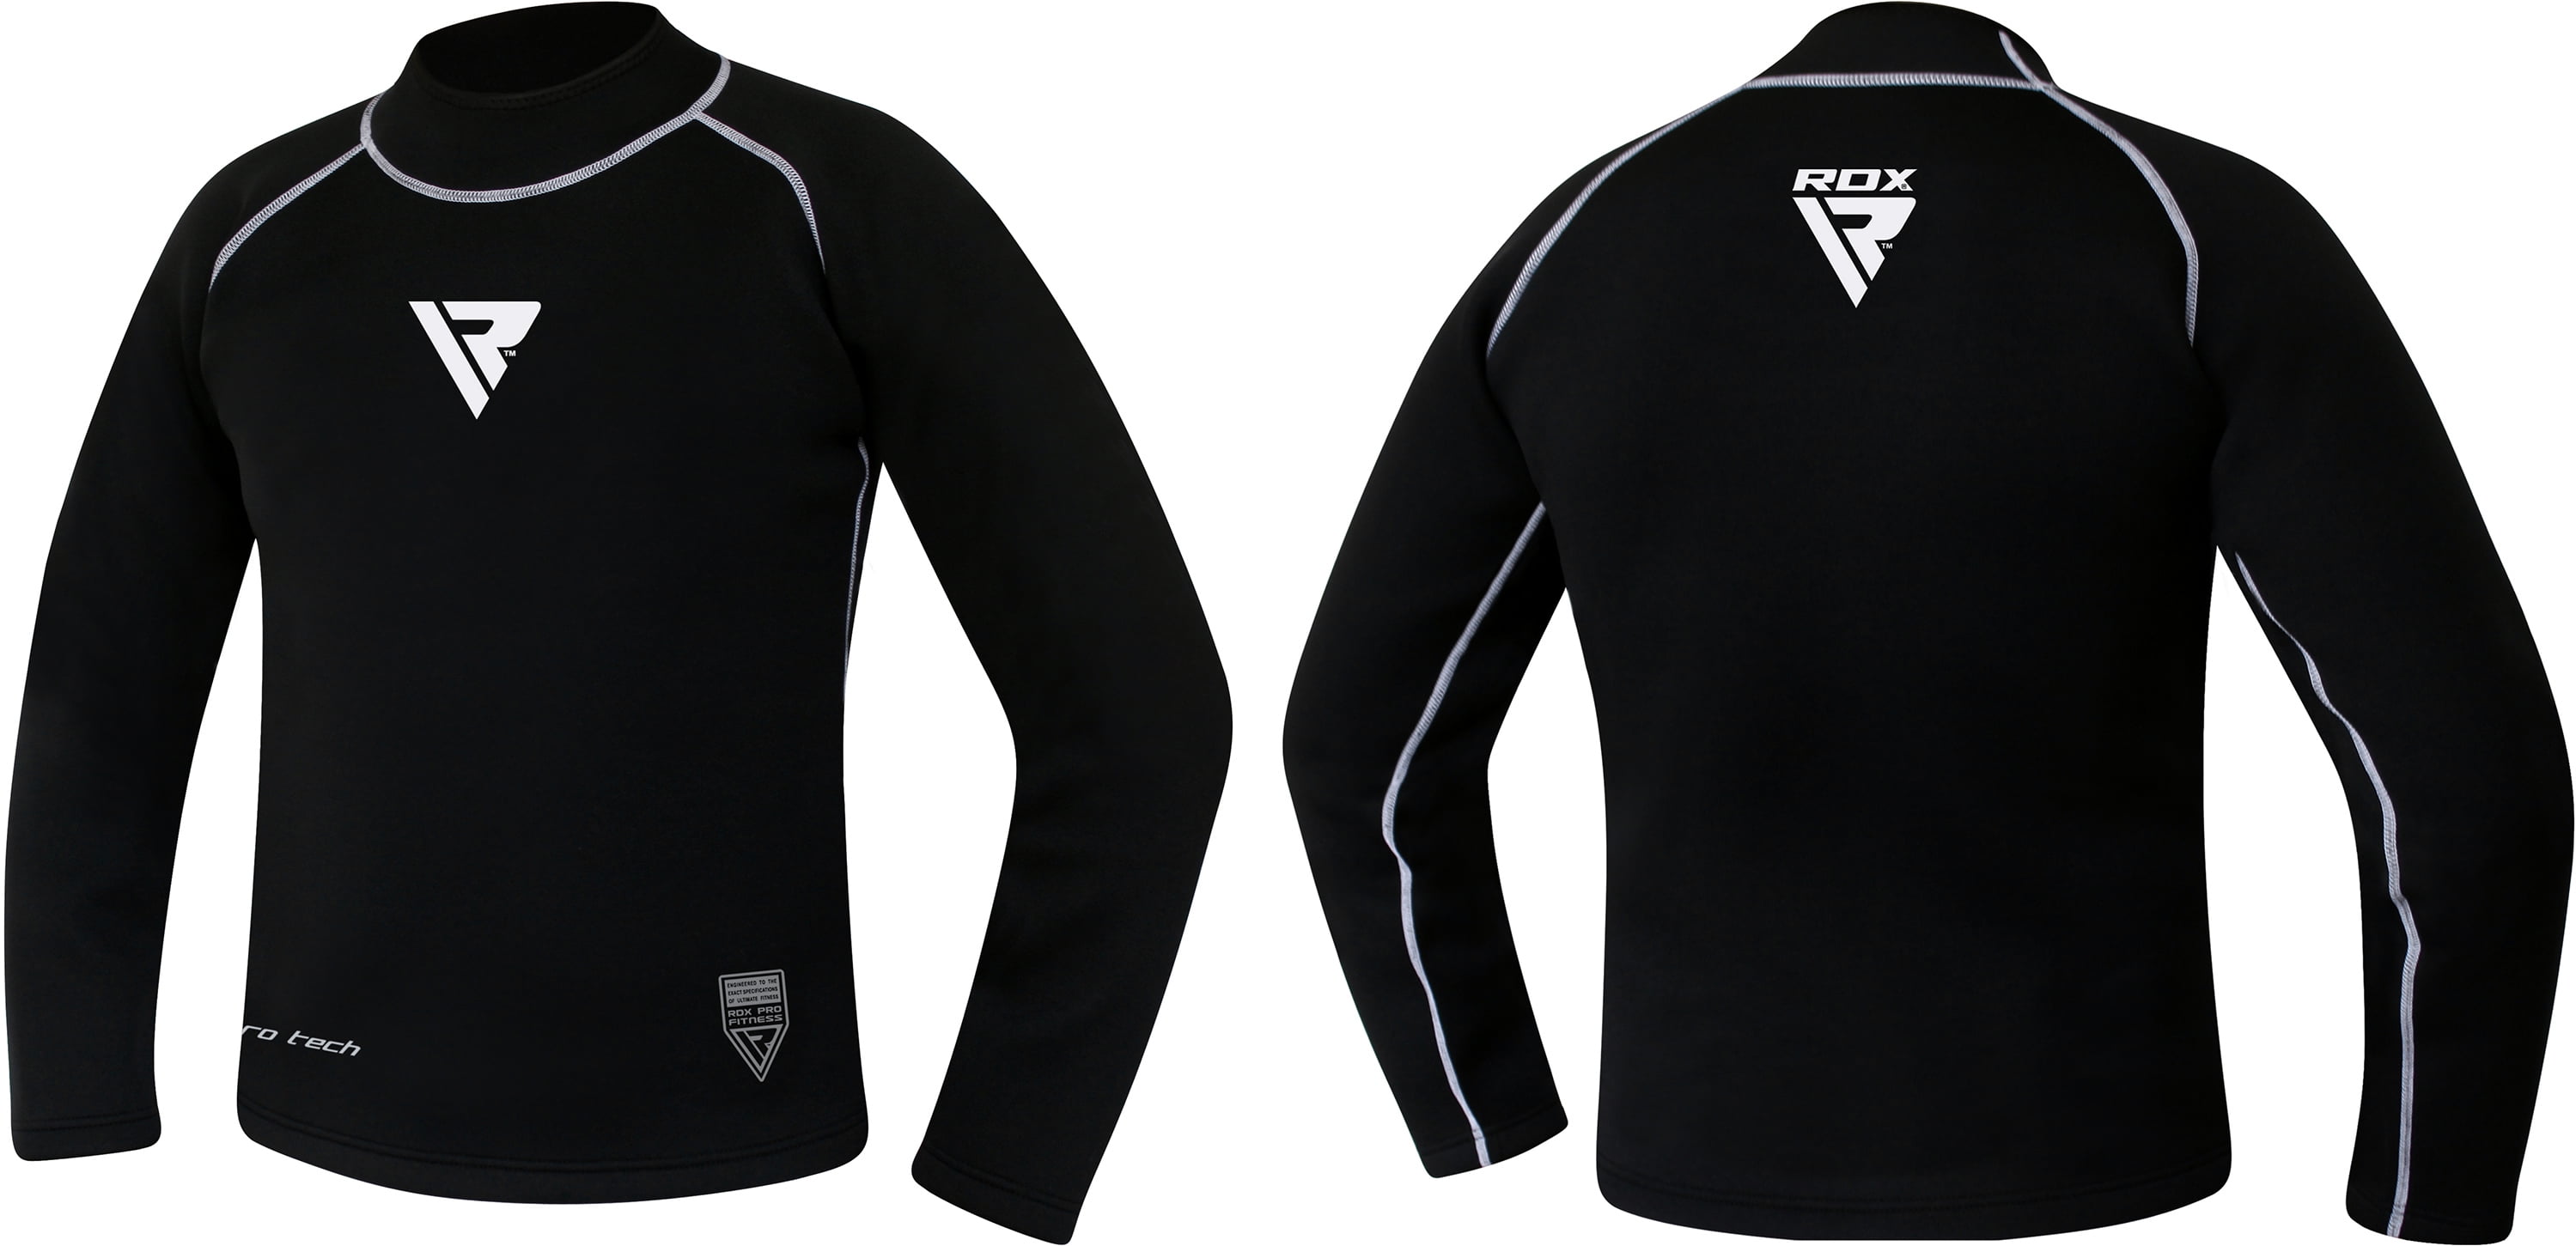 RDX Rash Guard Short Sleeve Compression Top Base Layer Fitness Sauna Suit Shirt